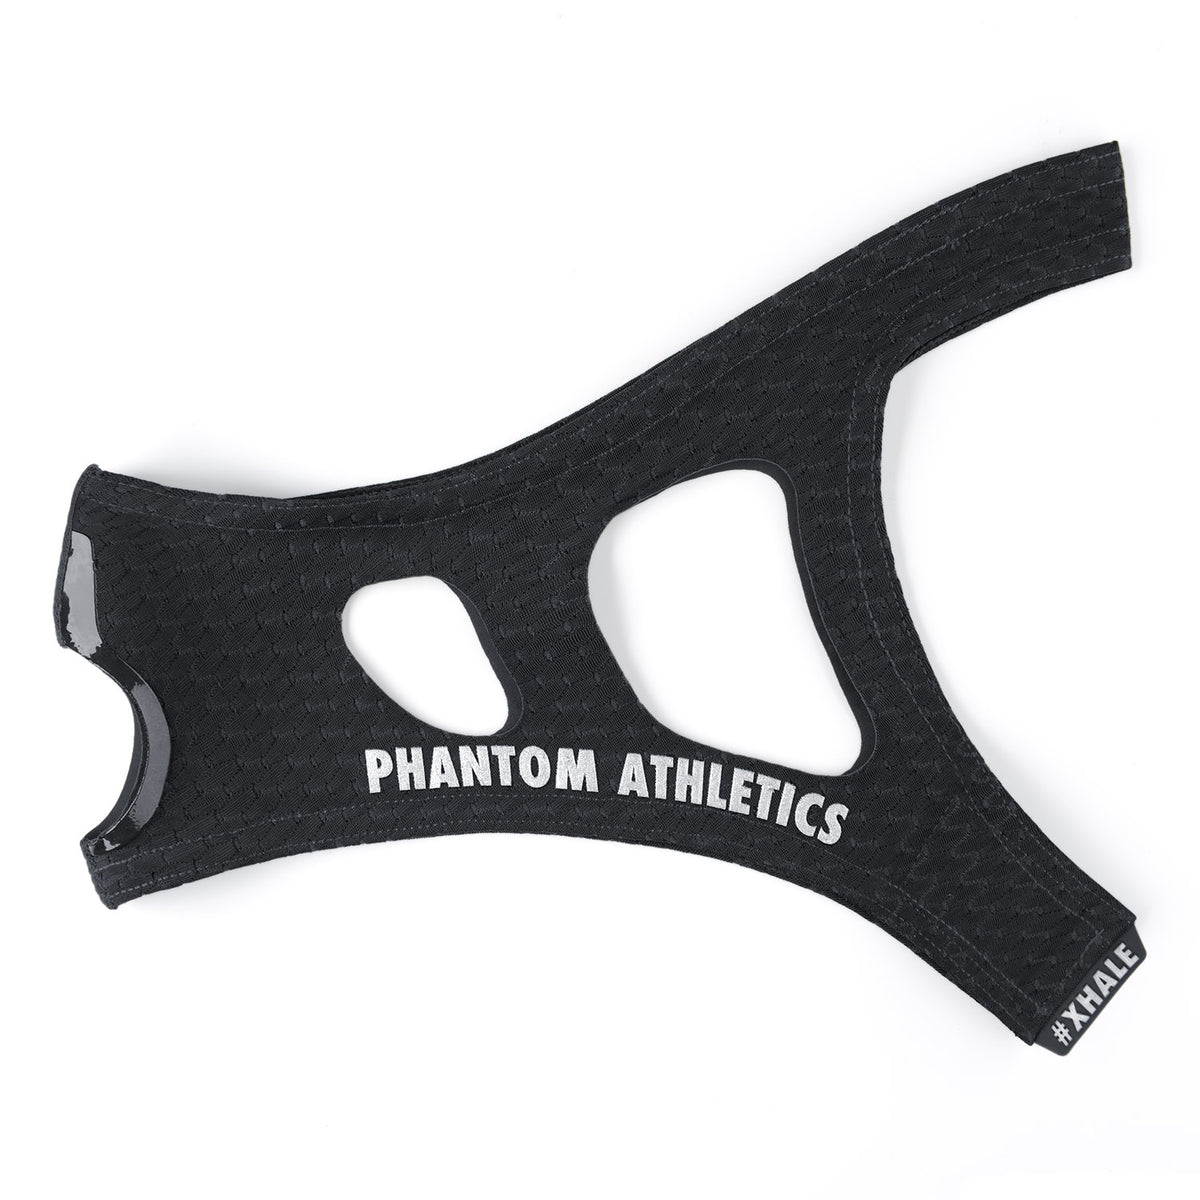 Phantom training mask sleeve - black - PHANTOM ATHLETICS